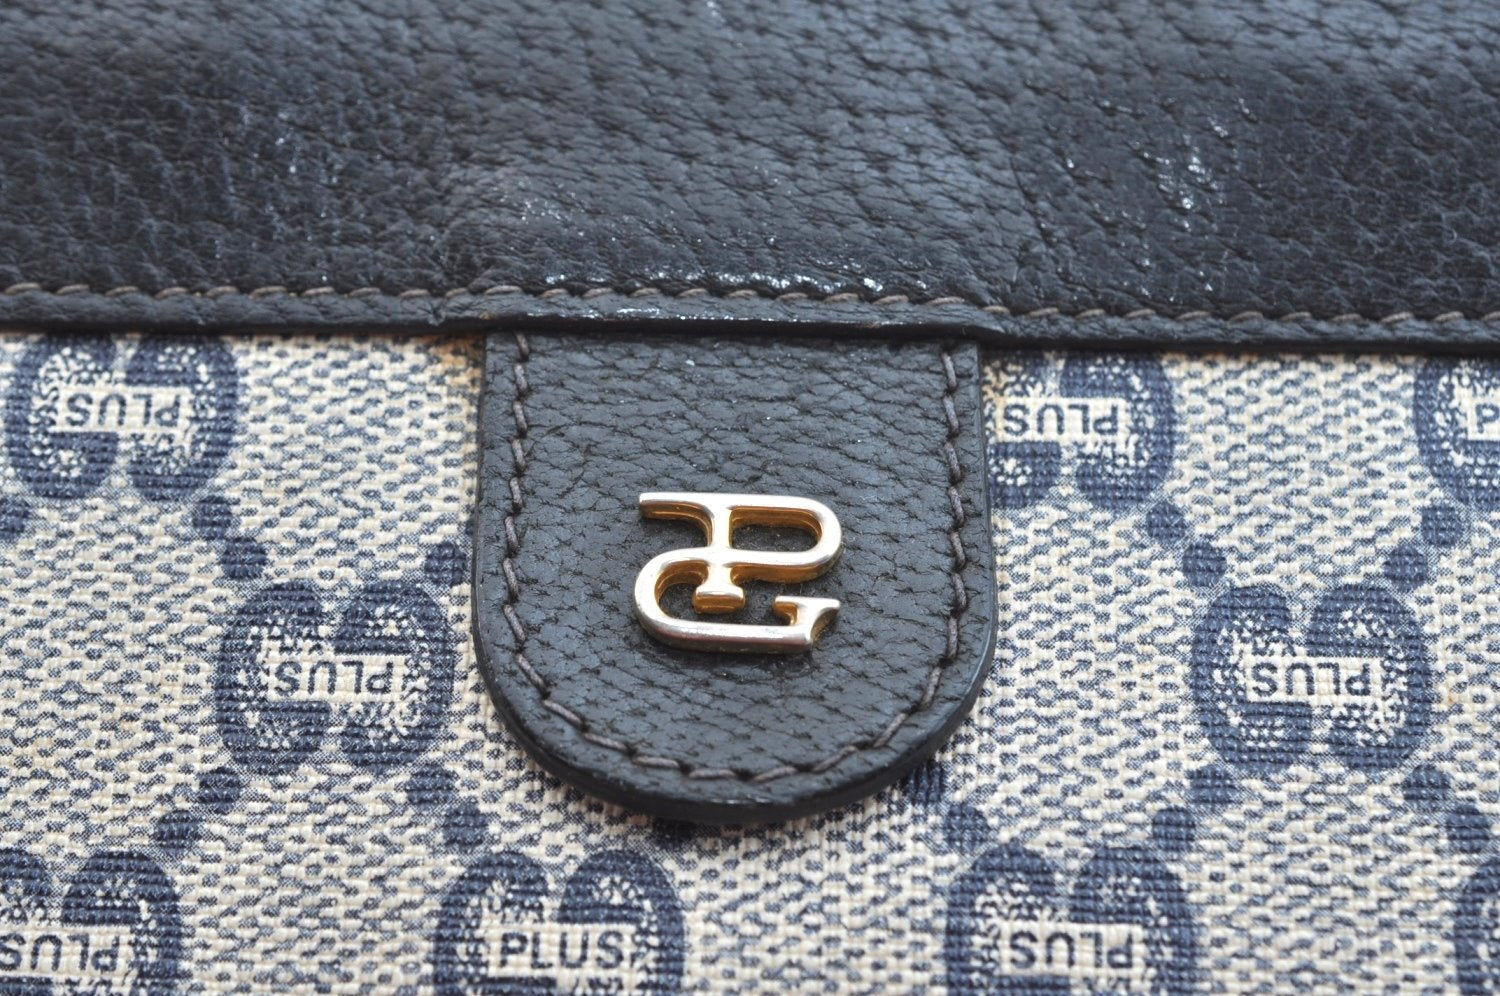 Authentic GUCCI GG Plus Clutch Hand Bag Purse GG PVC Leather Navy Blue K9288